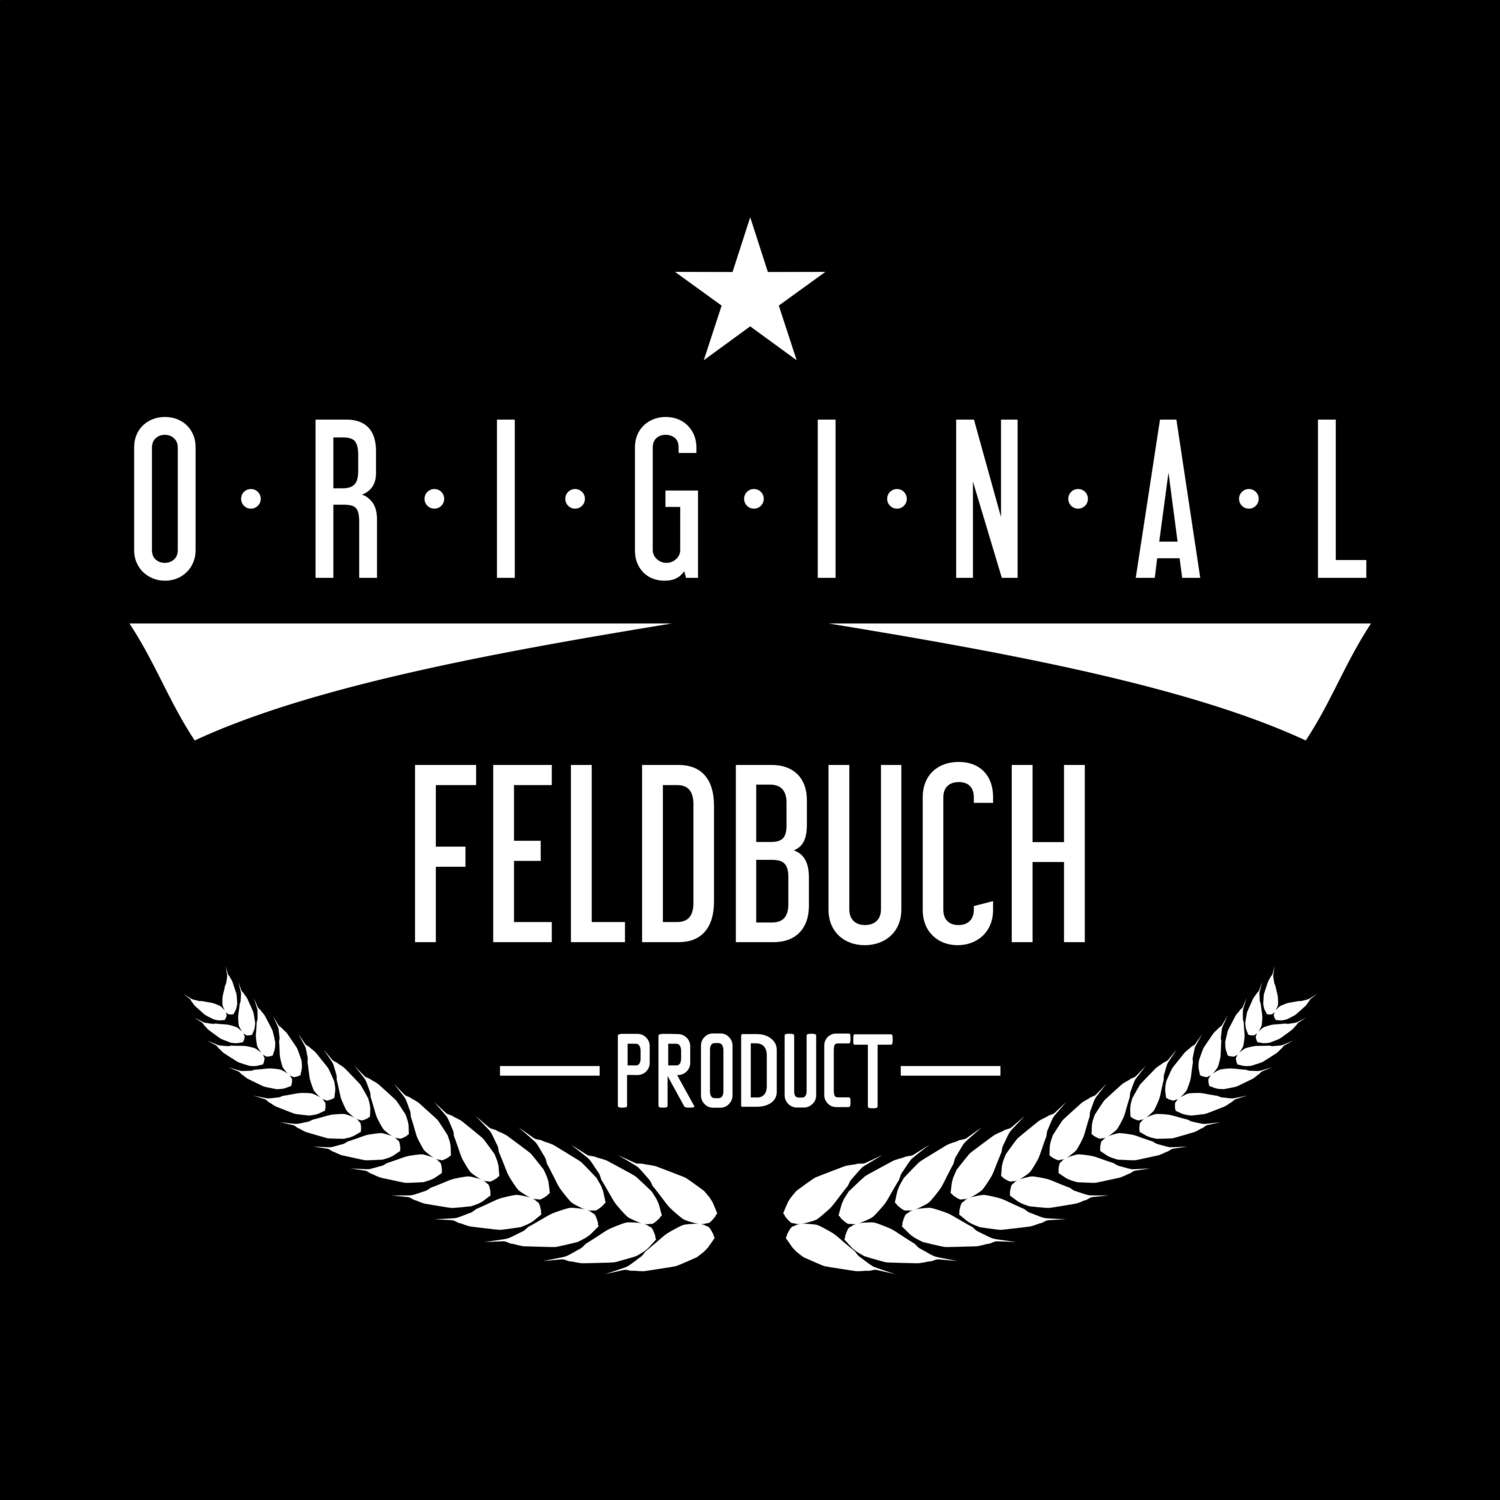 Feldbuch T-Shirt »Original Product«